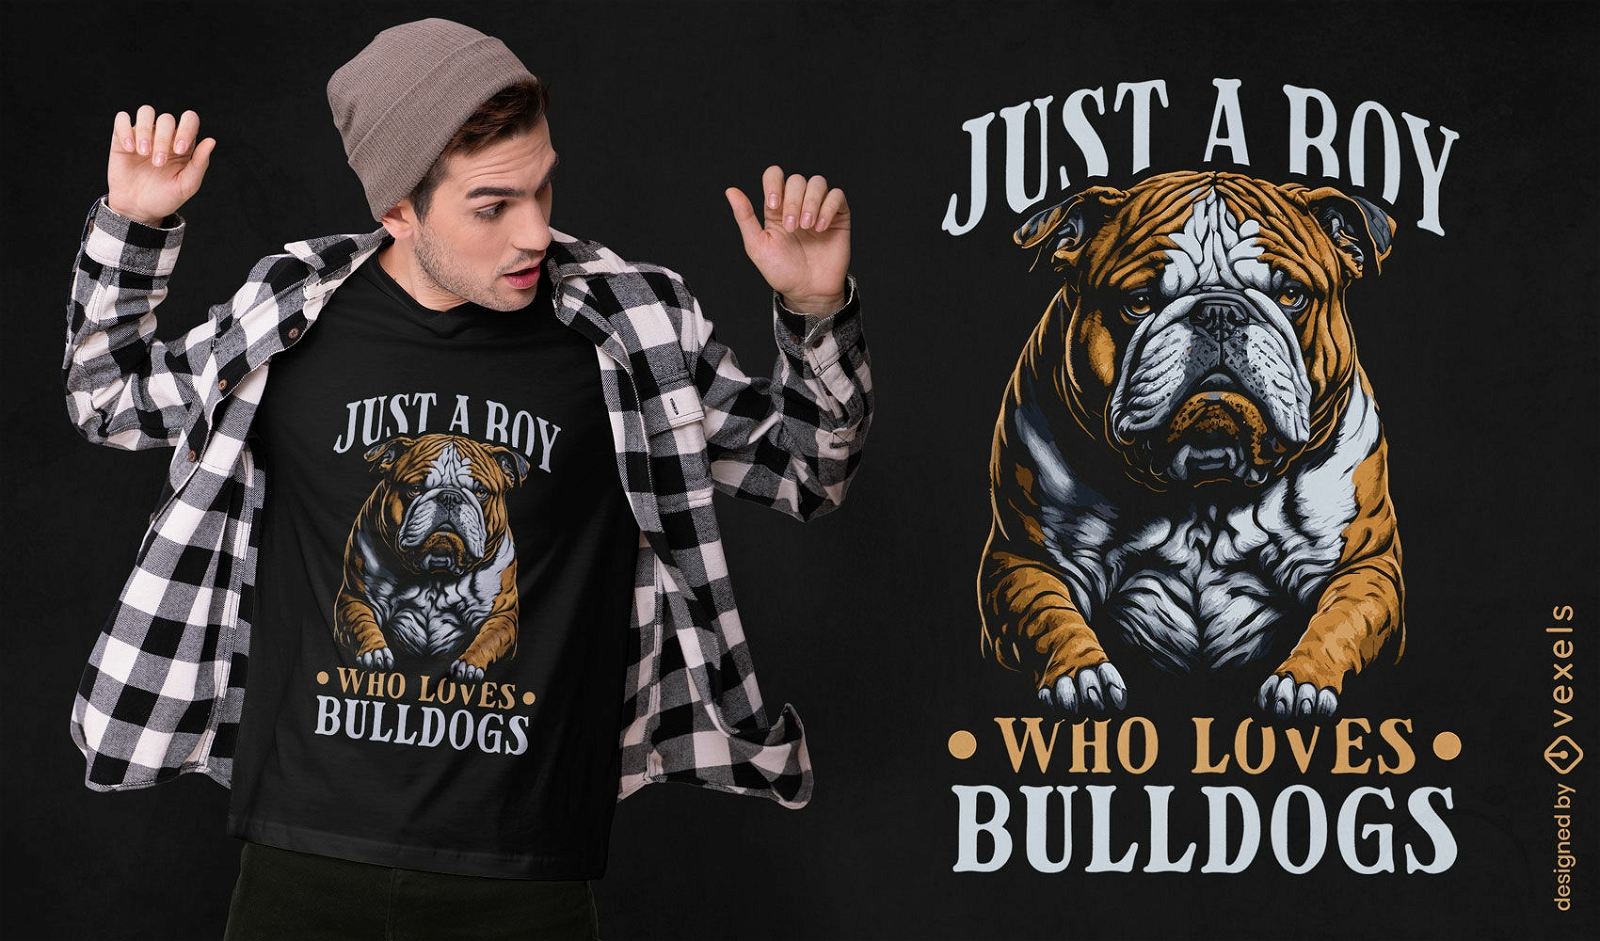 Boy who loves bulldogs t-shirt design